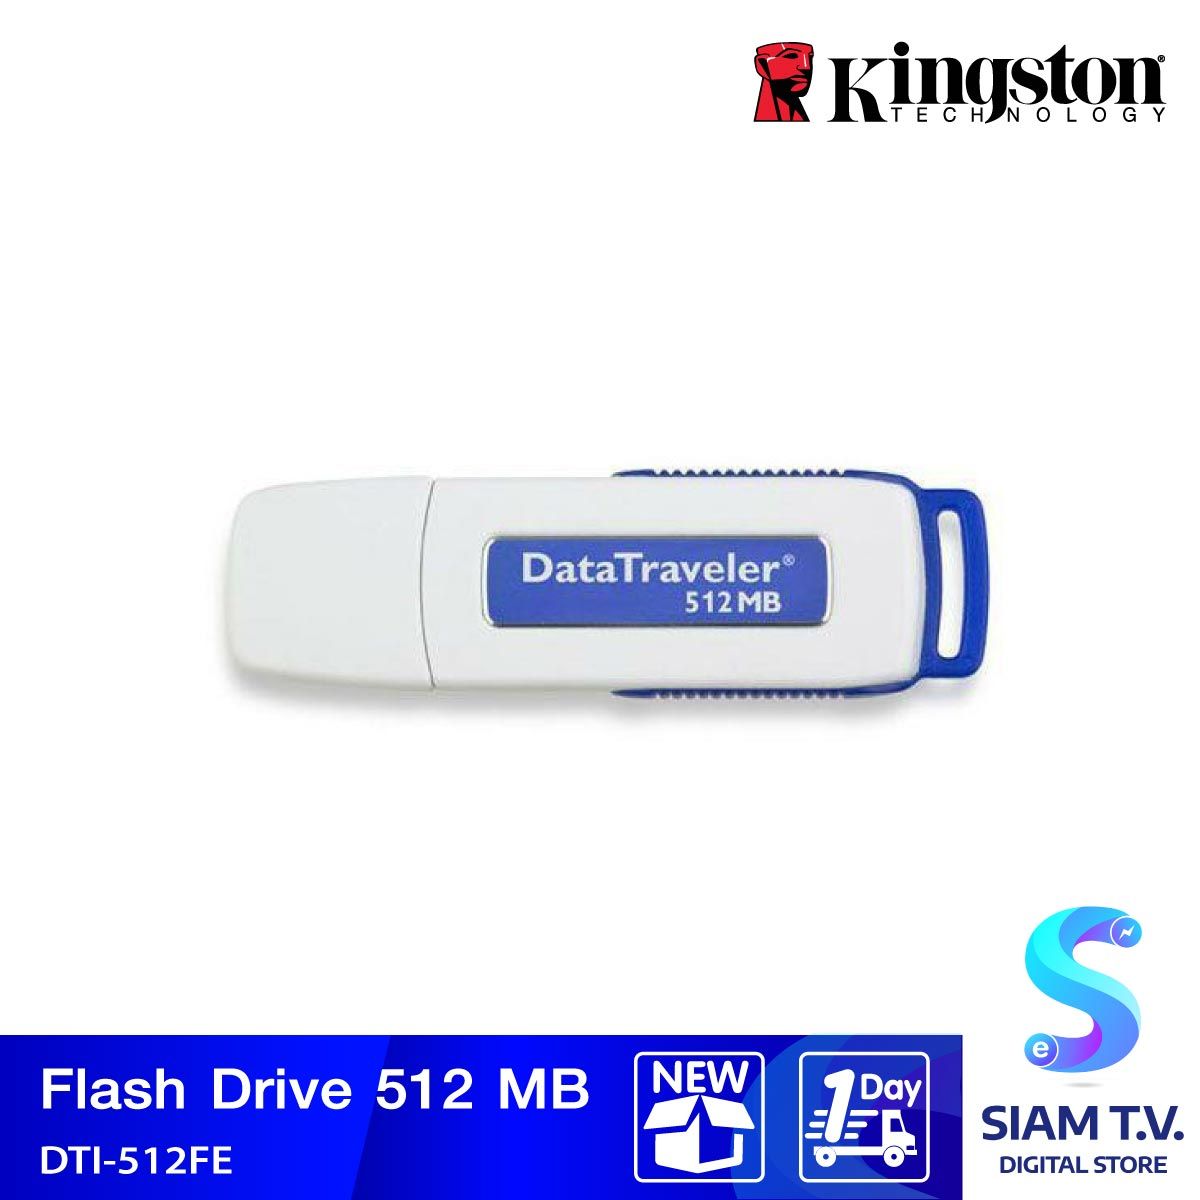 Kingston 512MB DataTraveler USB 2.0 Flash Drive